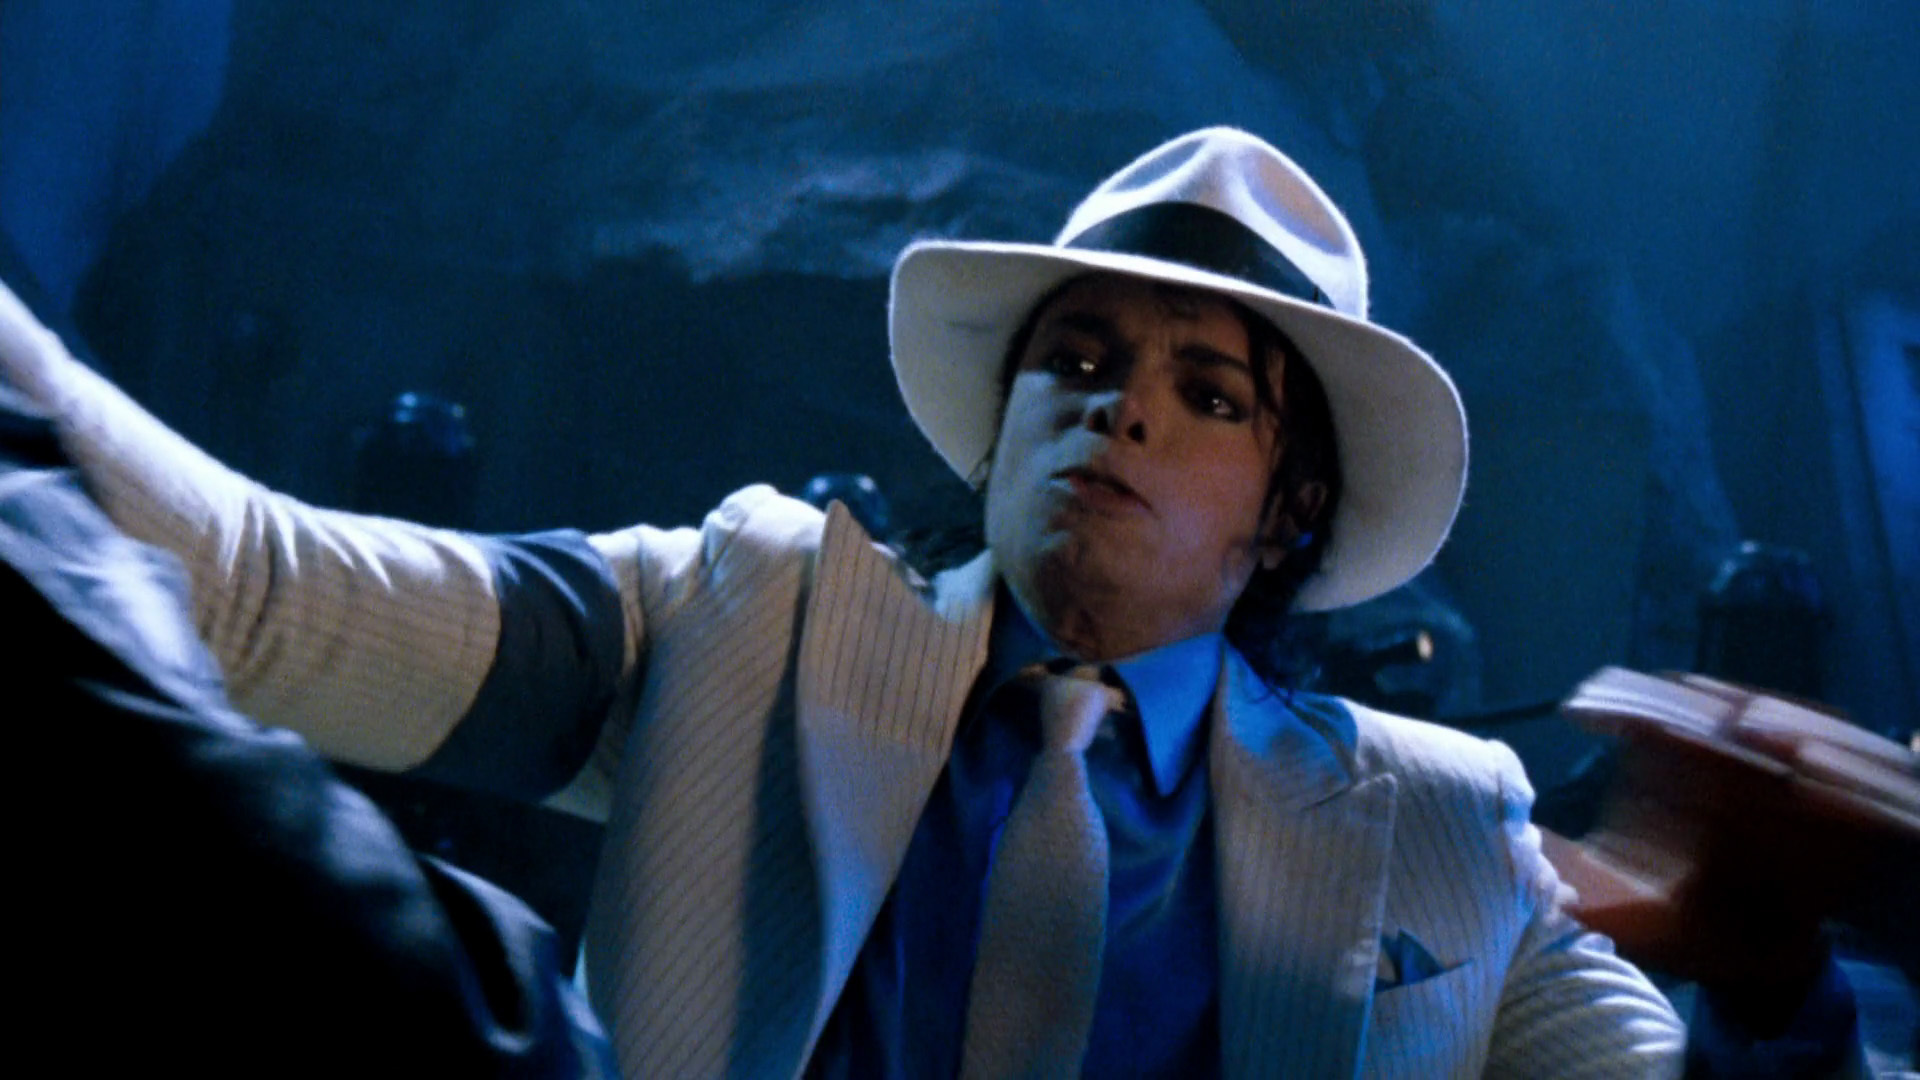 I LUV Smooth Criminal ::CrissloveMJ:: - Michael Jackson ...